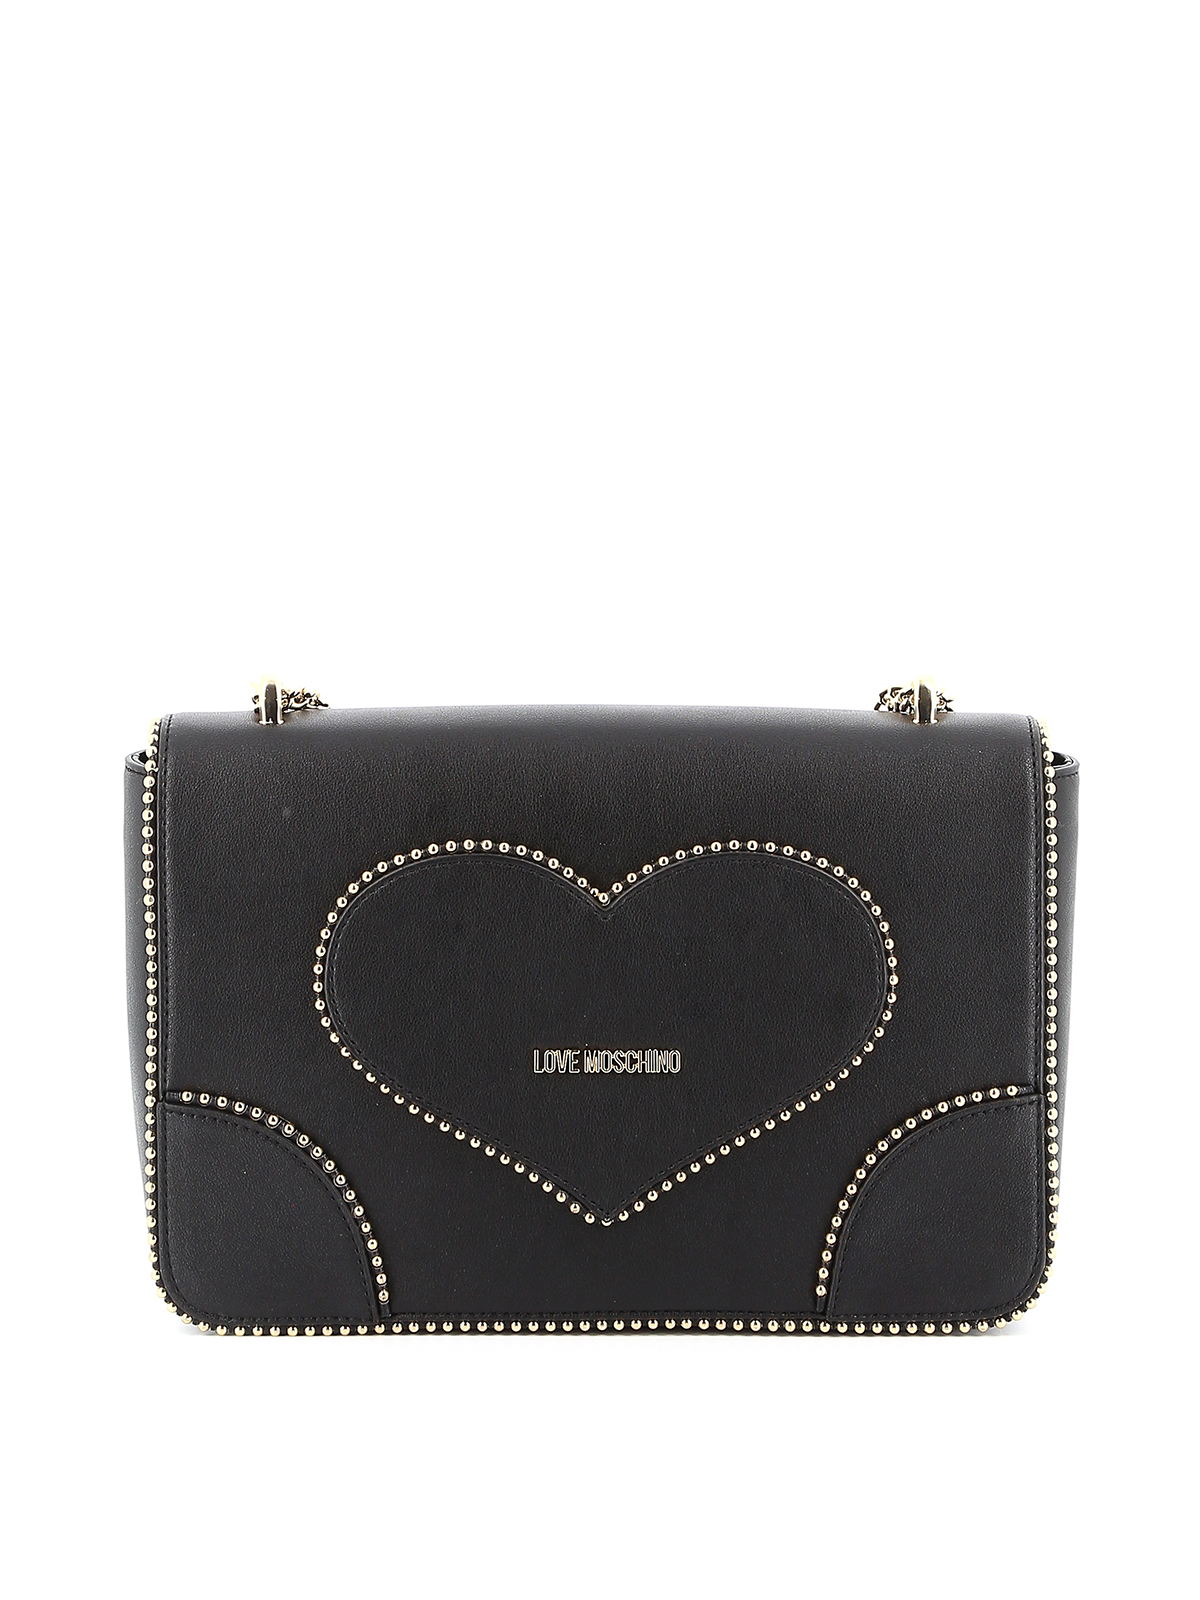 love moschino studded purse